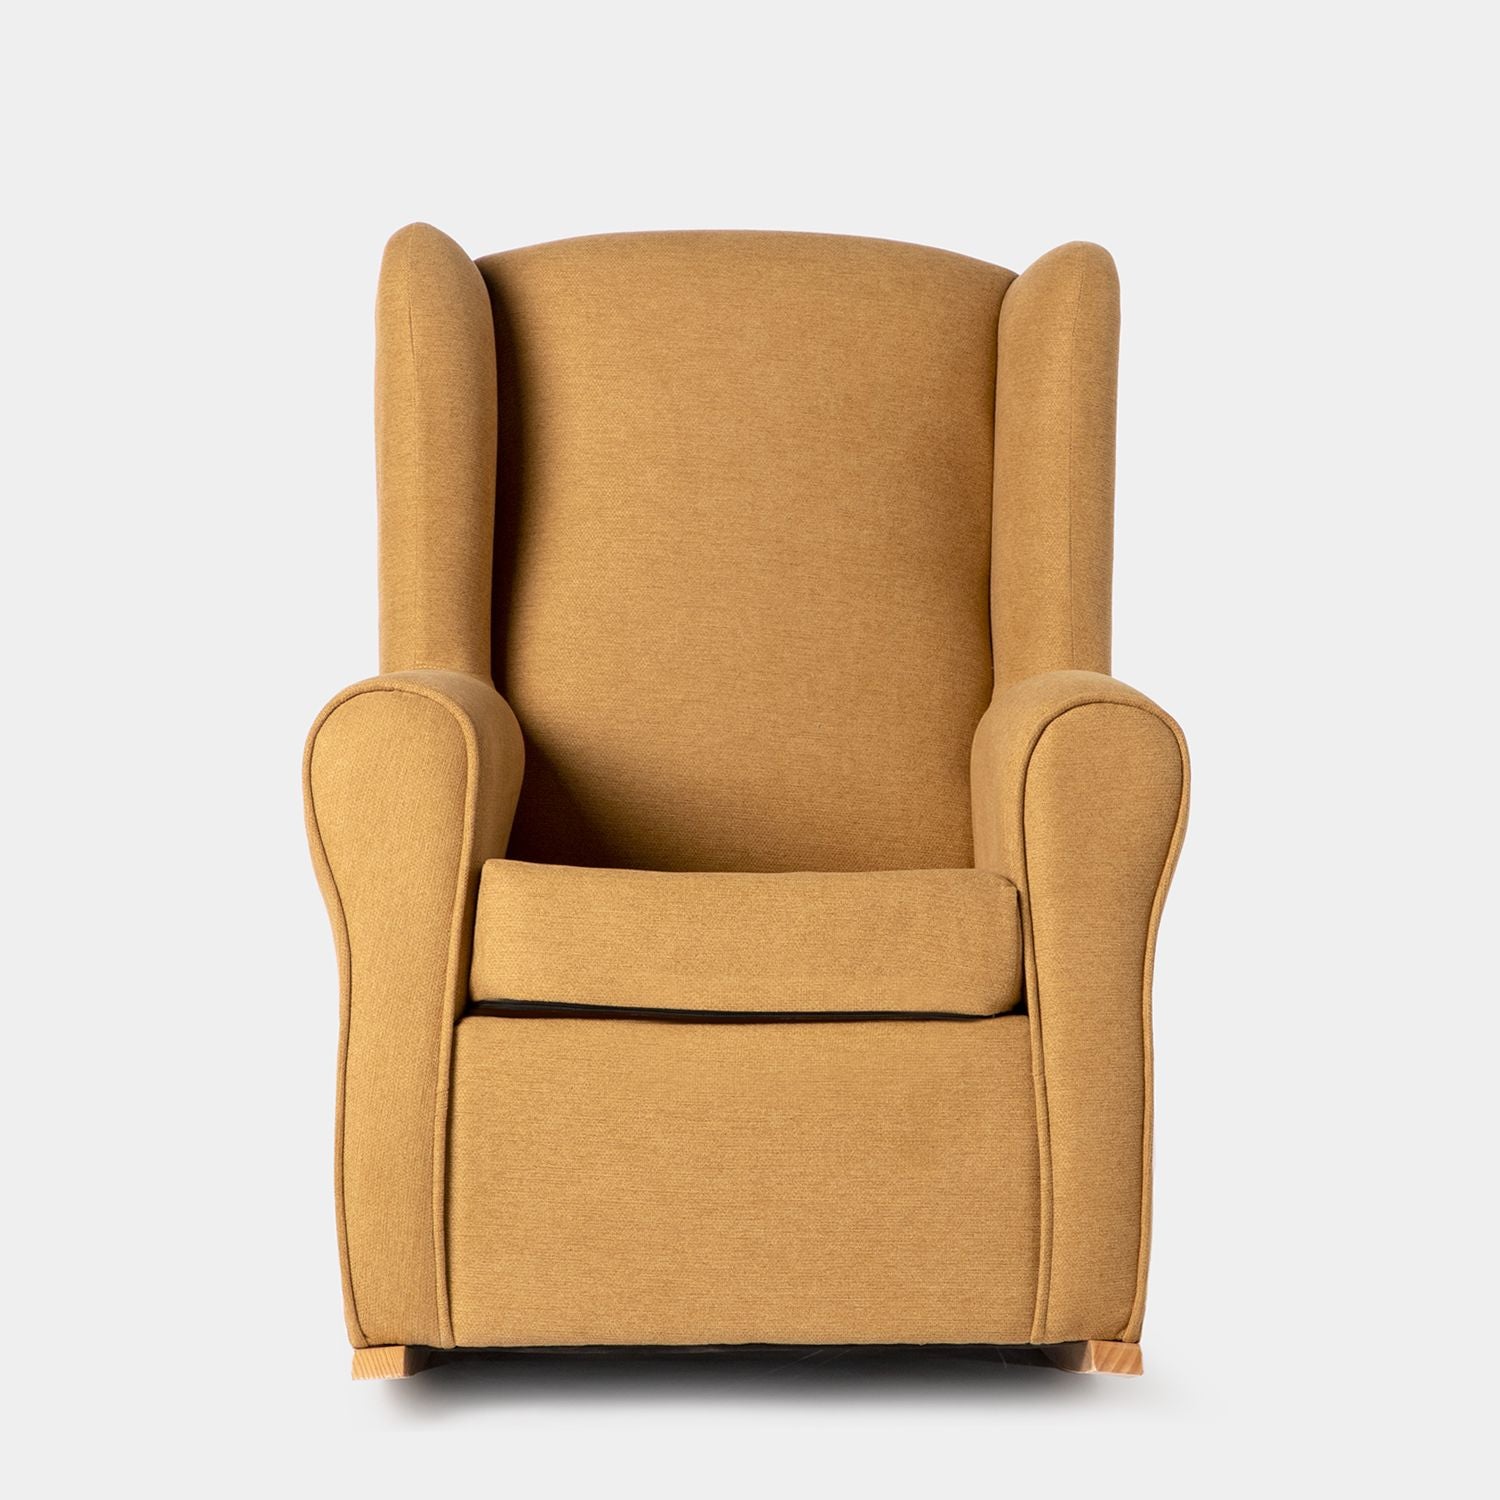 4 sillas Blair silla de comedor tapizada mostaza Pack 4 sillas - Klast –  Bechester